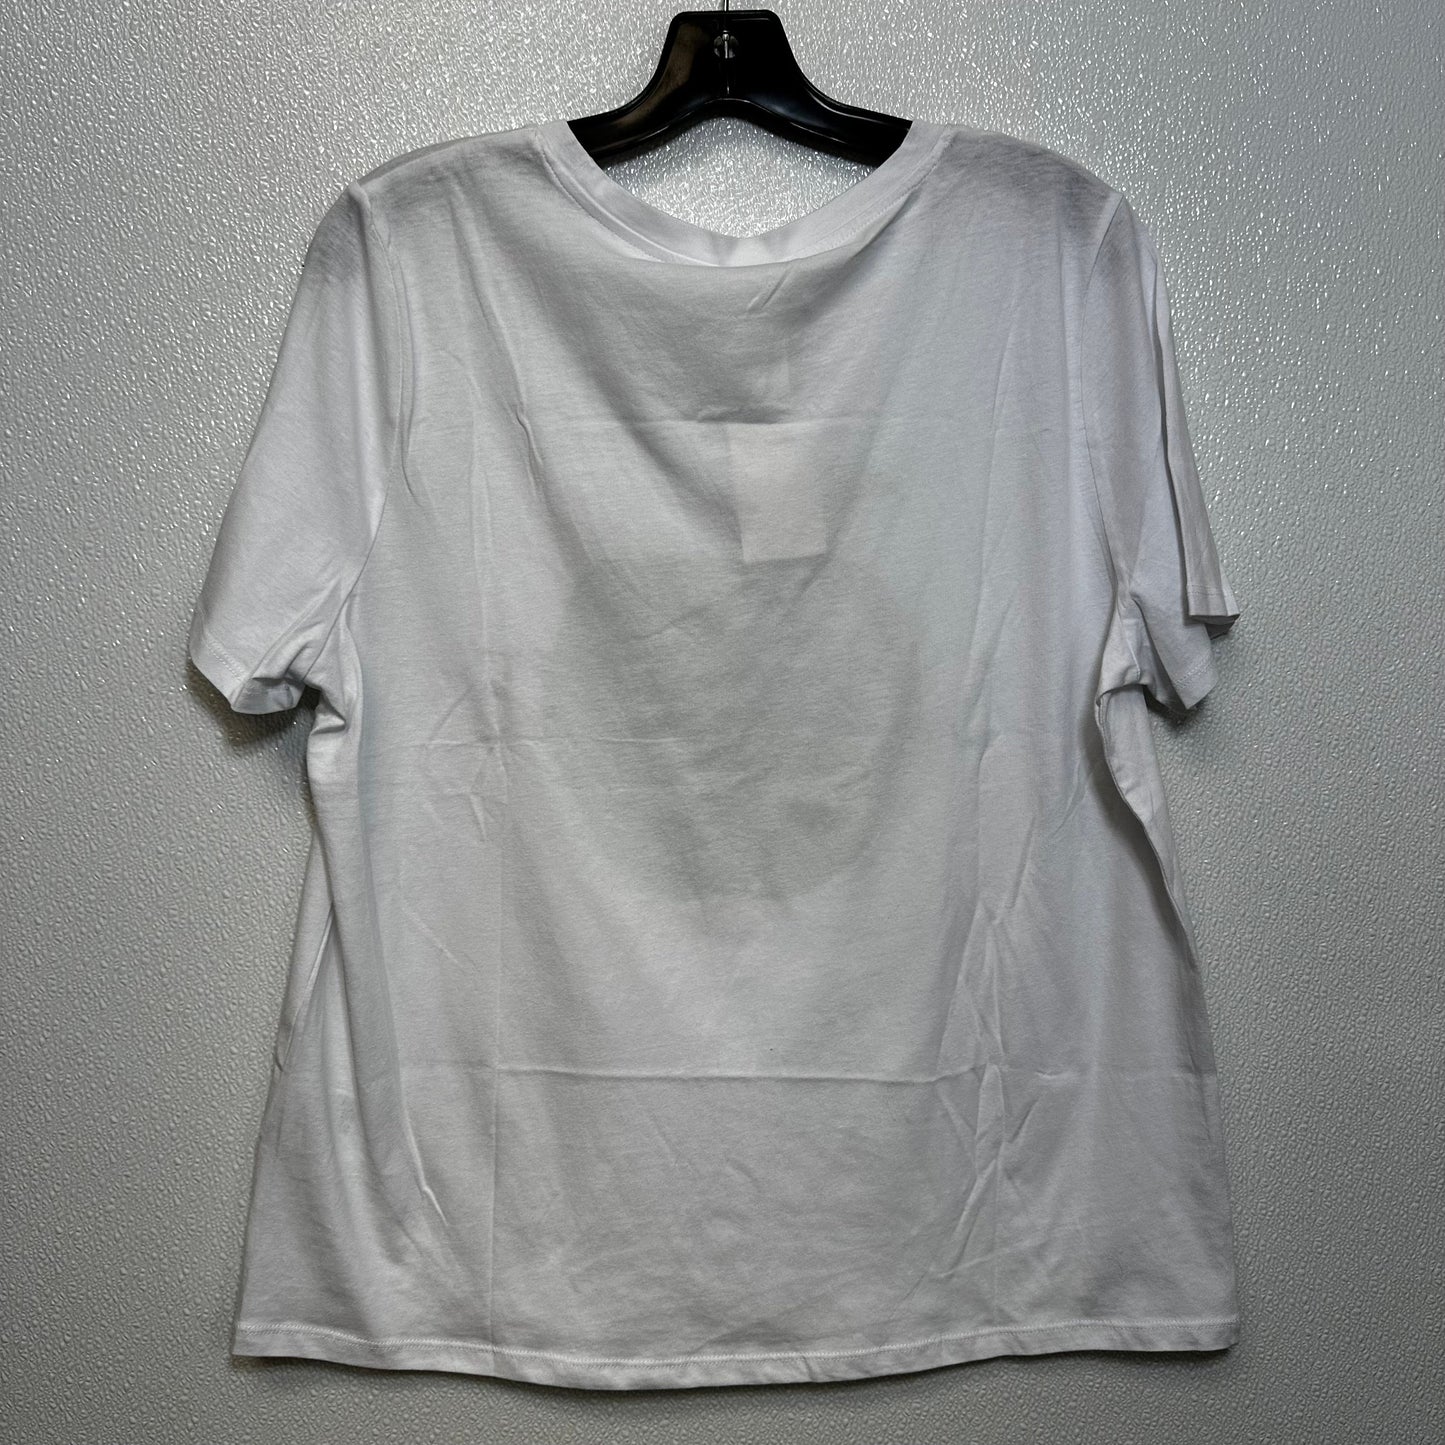 White Top Short Sleeve Basic H&m, Size L